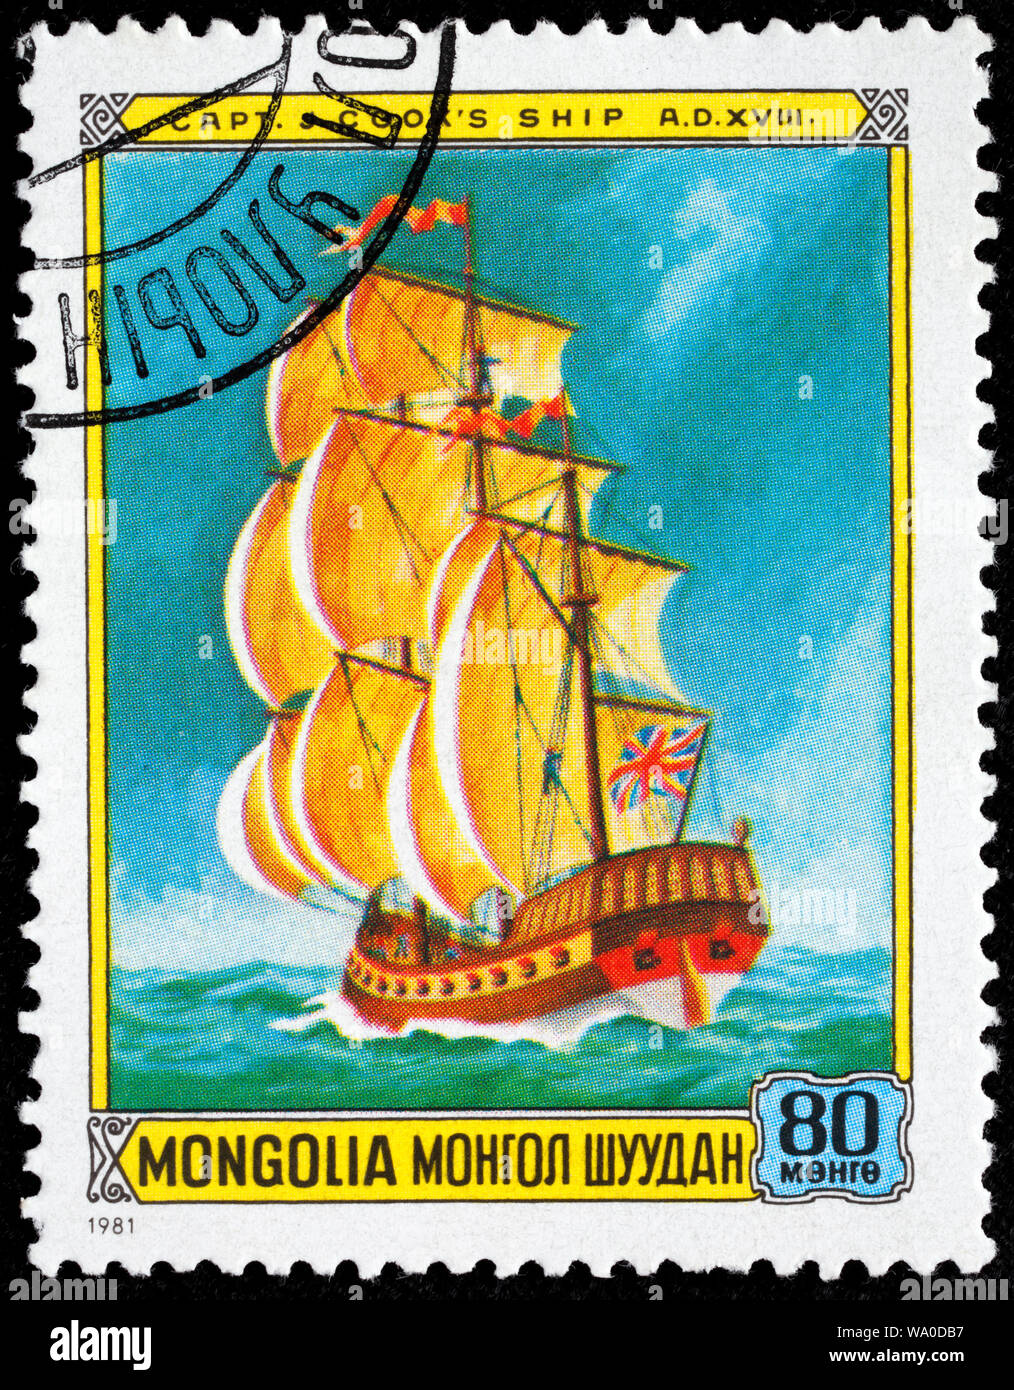 Endeavor, Sail ship of Captain James Cook, 18th century, postage stamp, Mongolia, 1981 Stock Photo